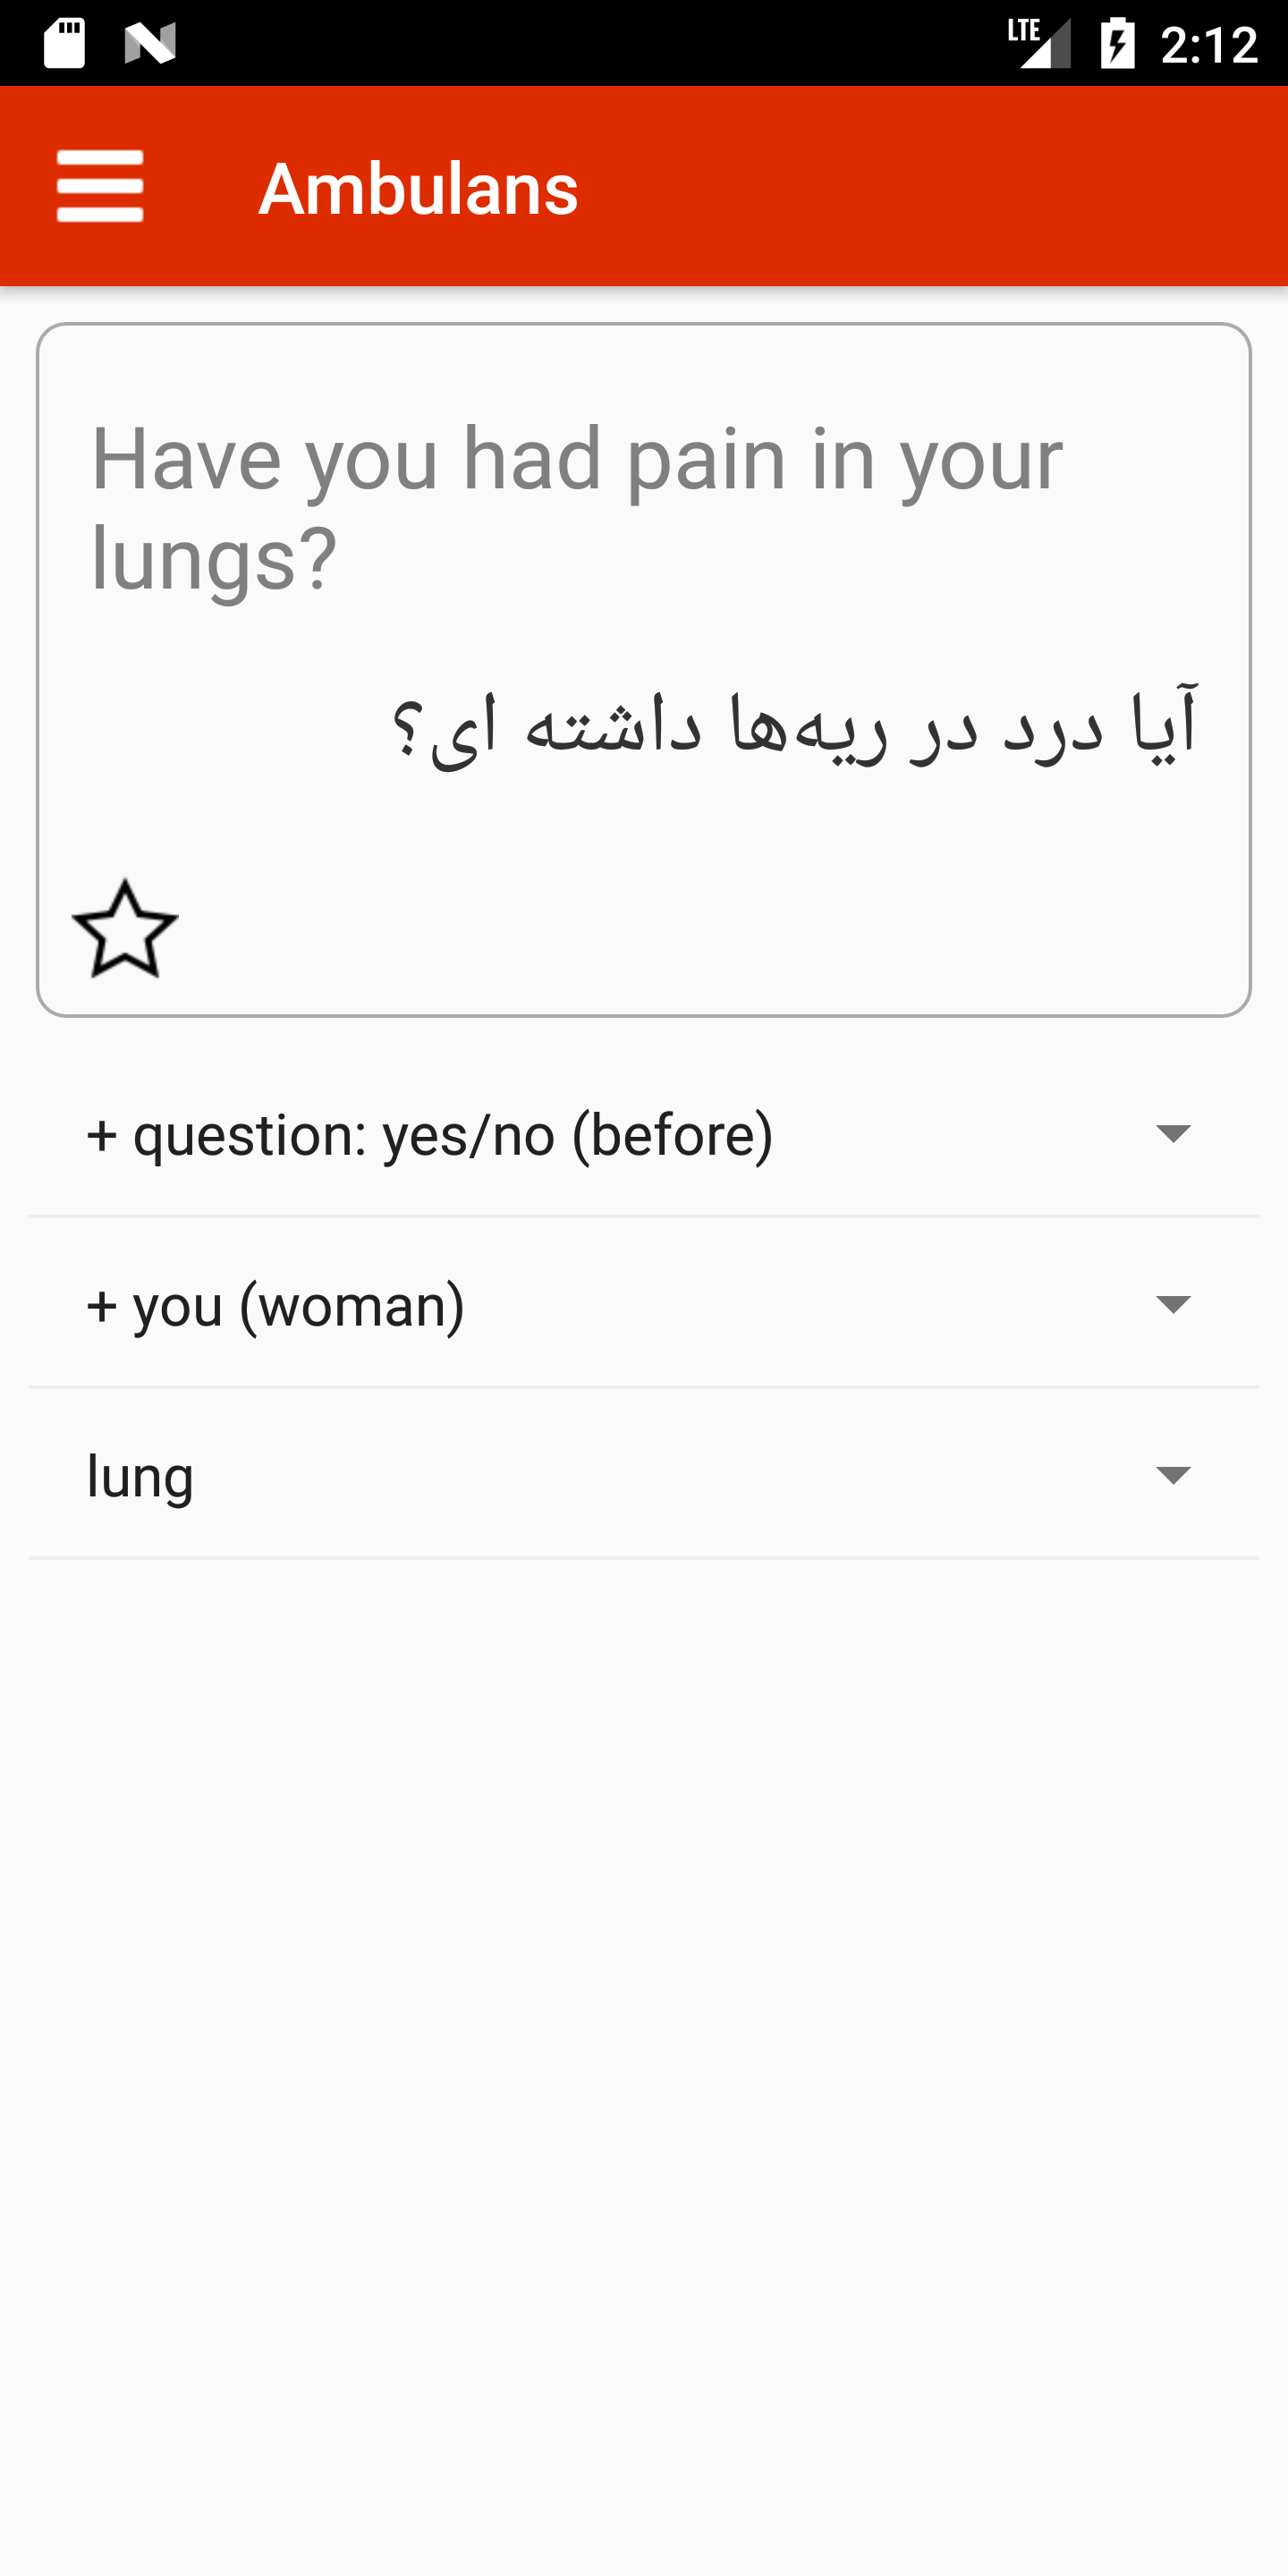 Ambulance app: Translation from English to Persian